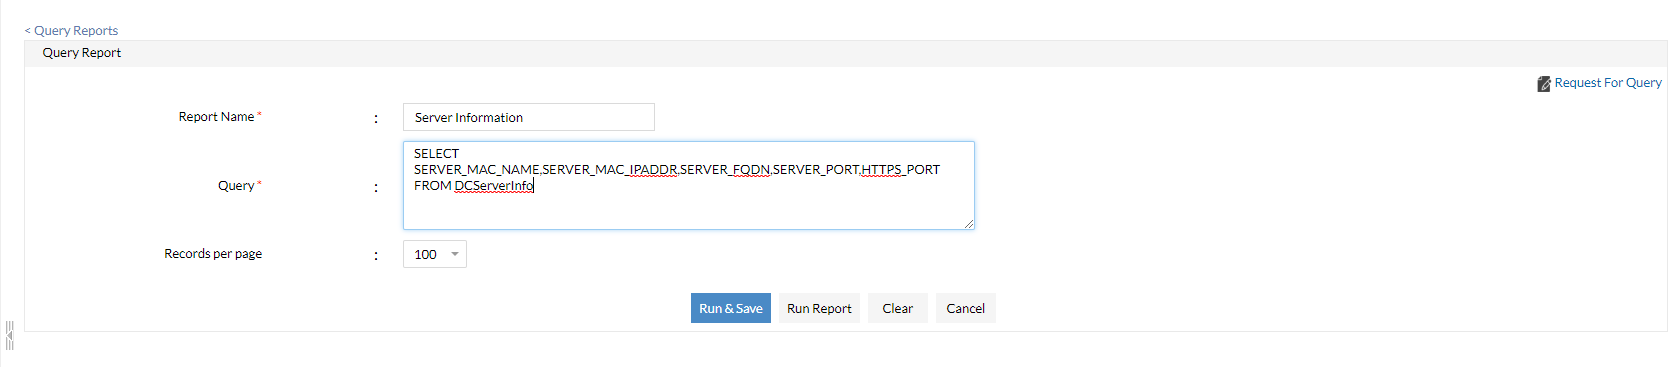 Desktop Central: Query Report to obtain server details